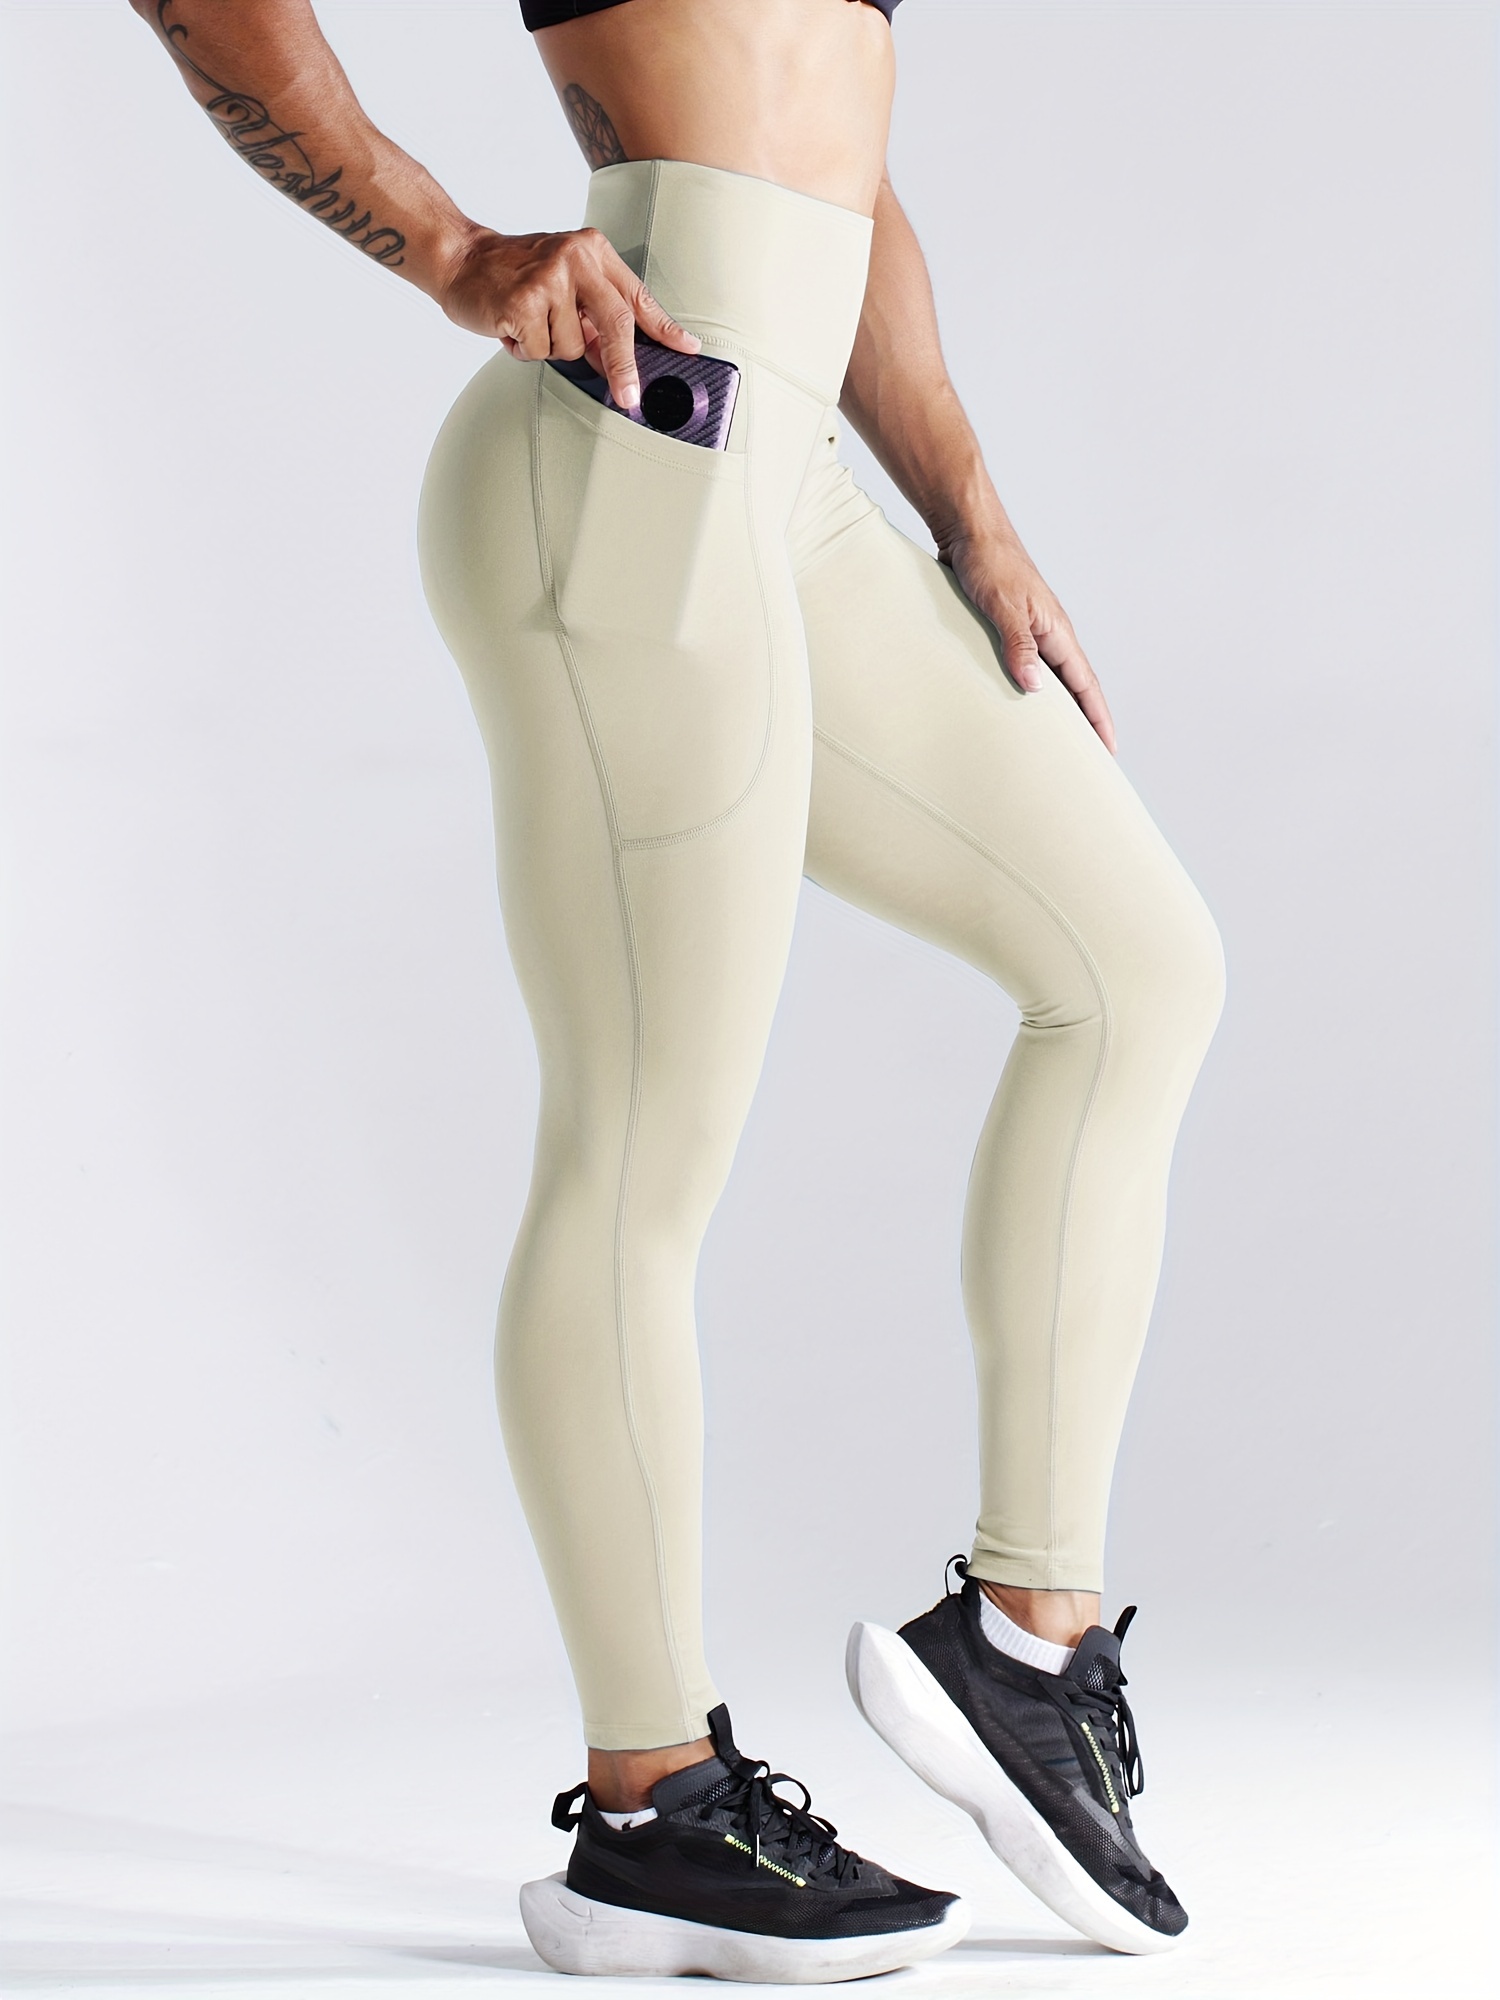 Ptula Alainah III Legging - Dusty Mauve, Women's Fashion, New